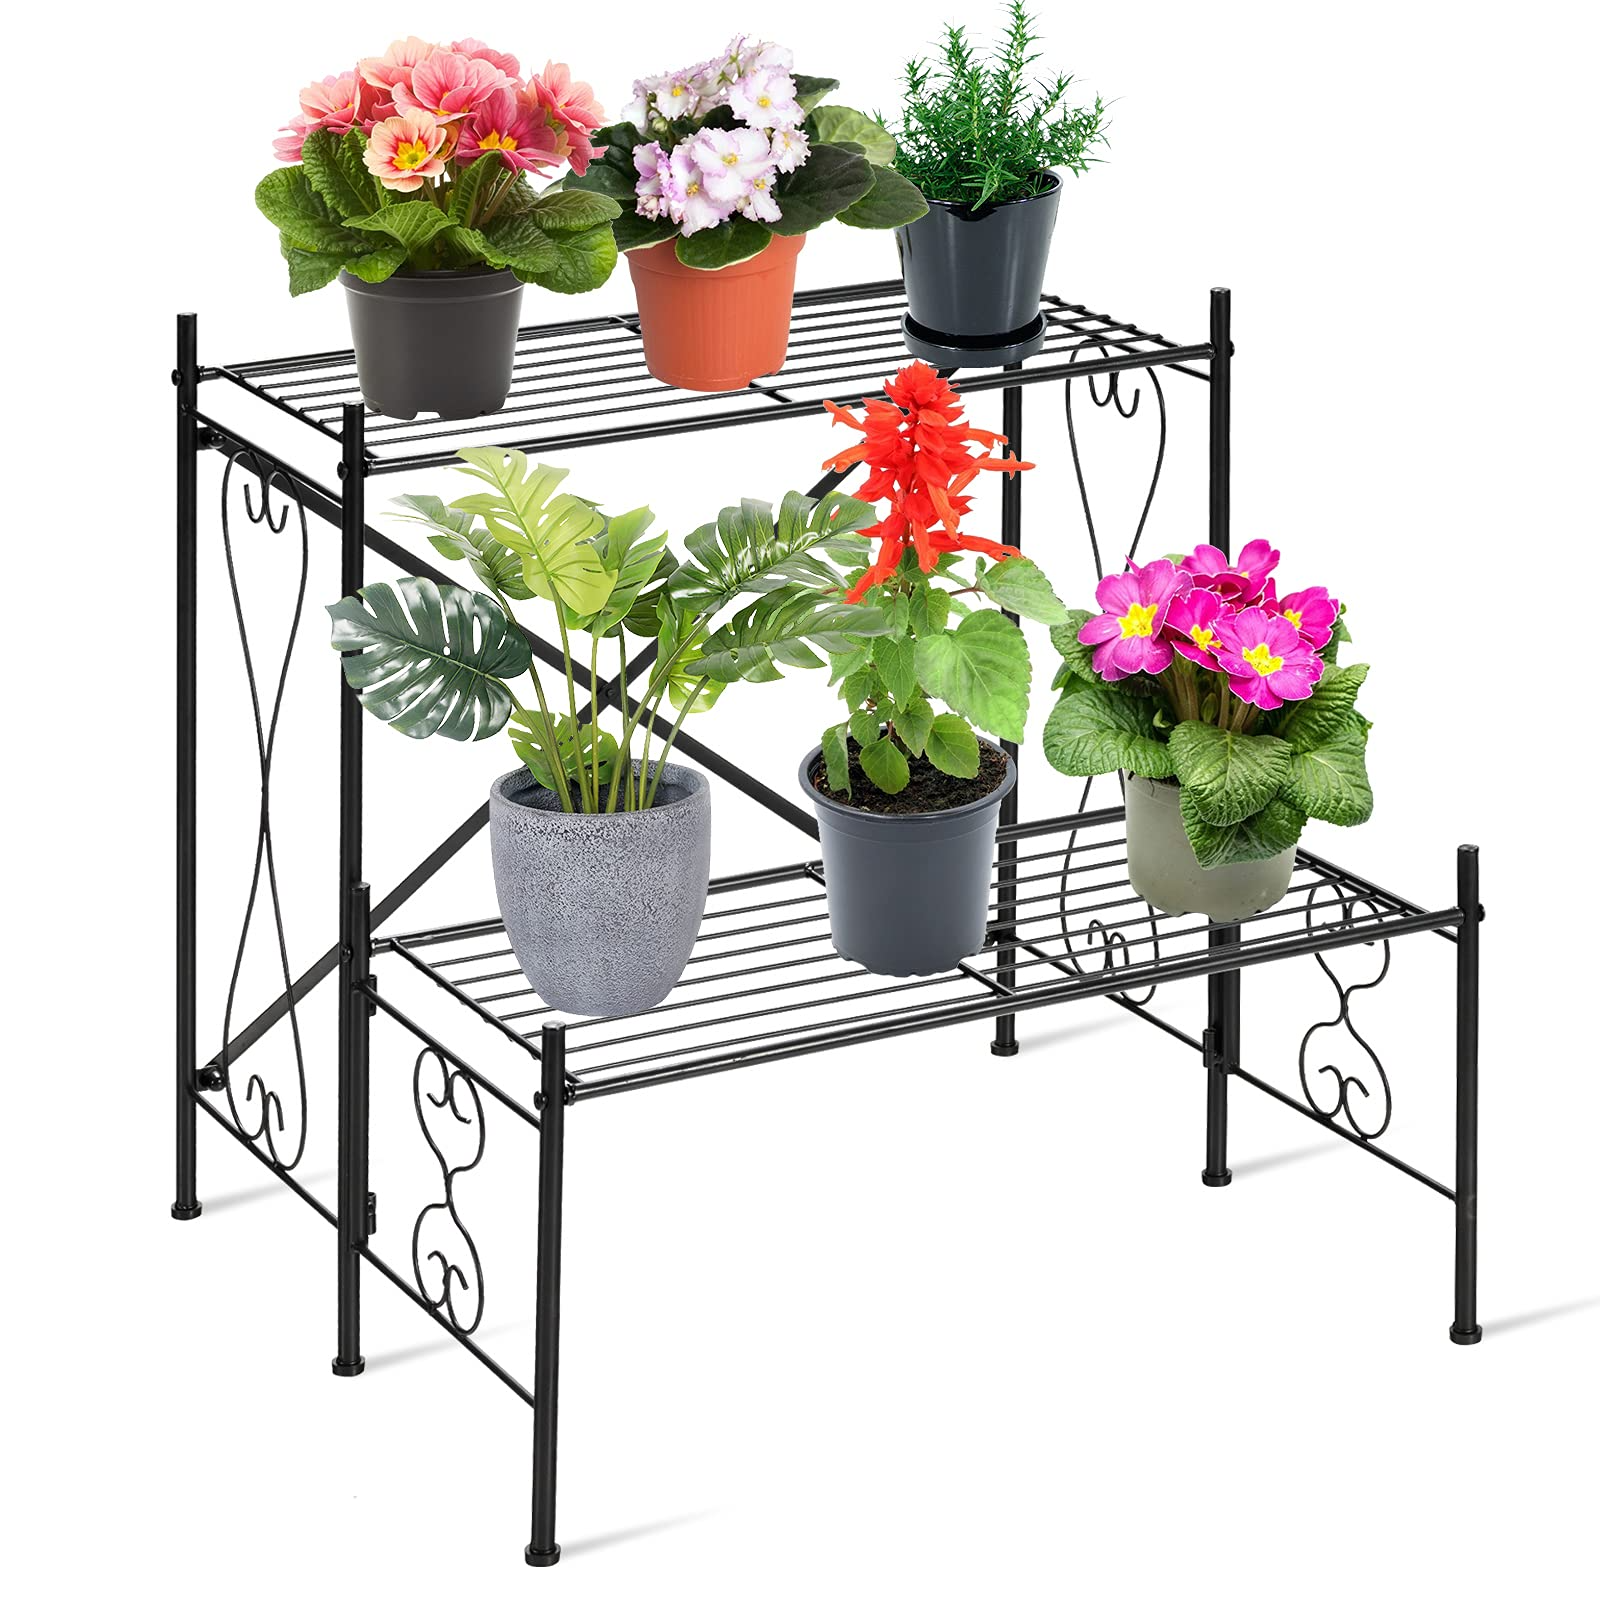 Giantex 2 Tiers Metal Plant Stand Flower Pots Holder Storage Rack